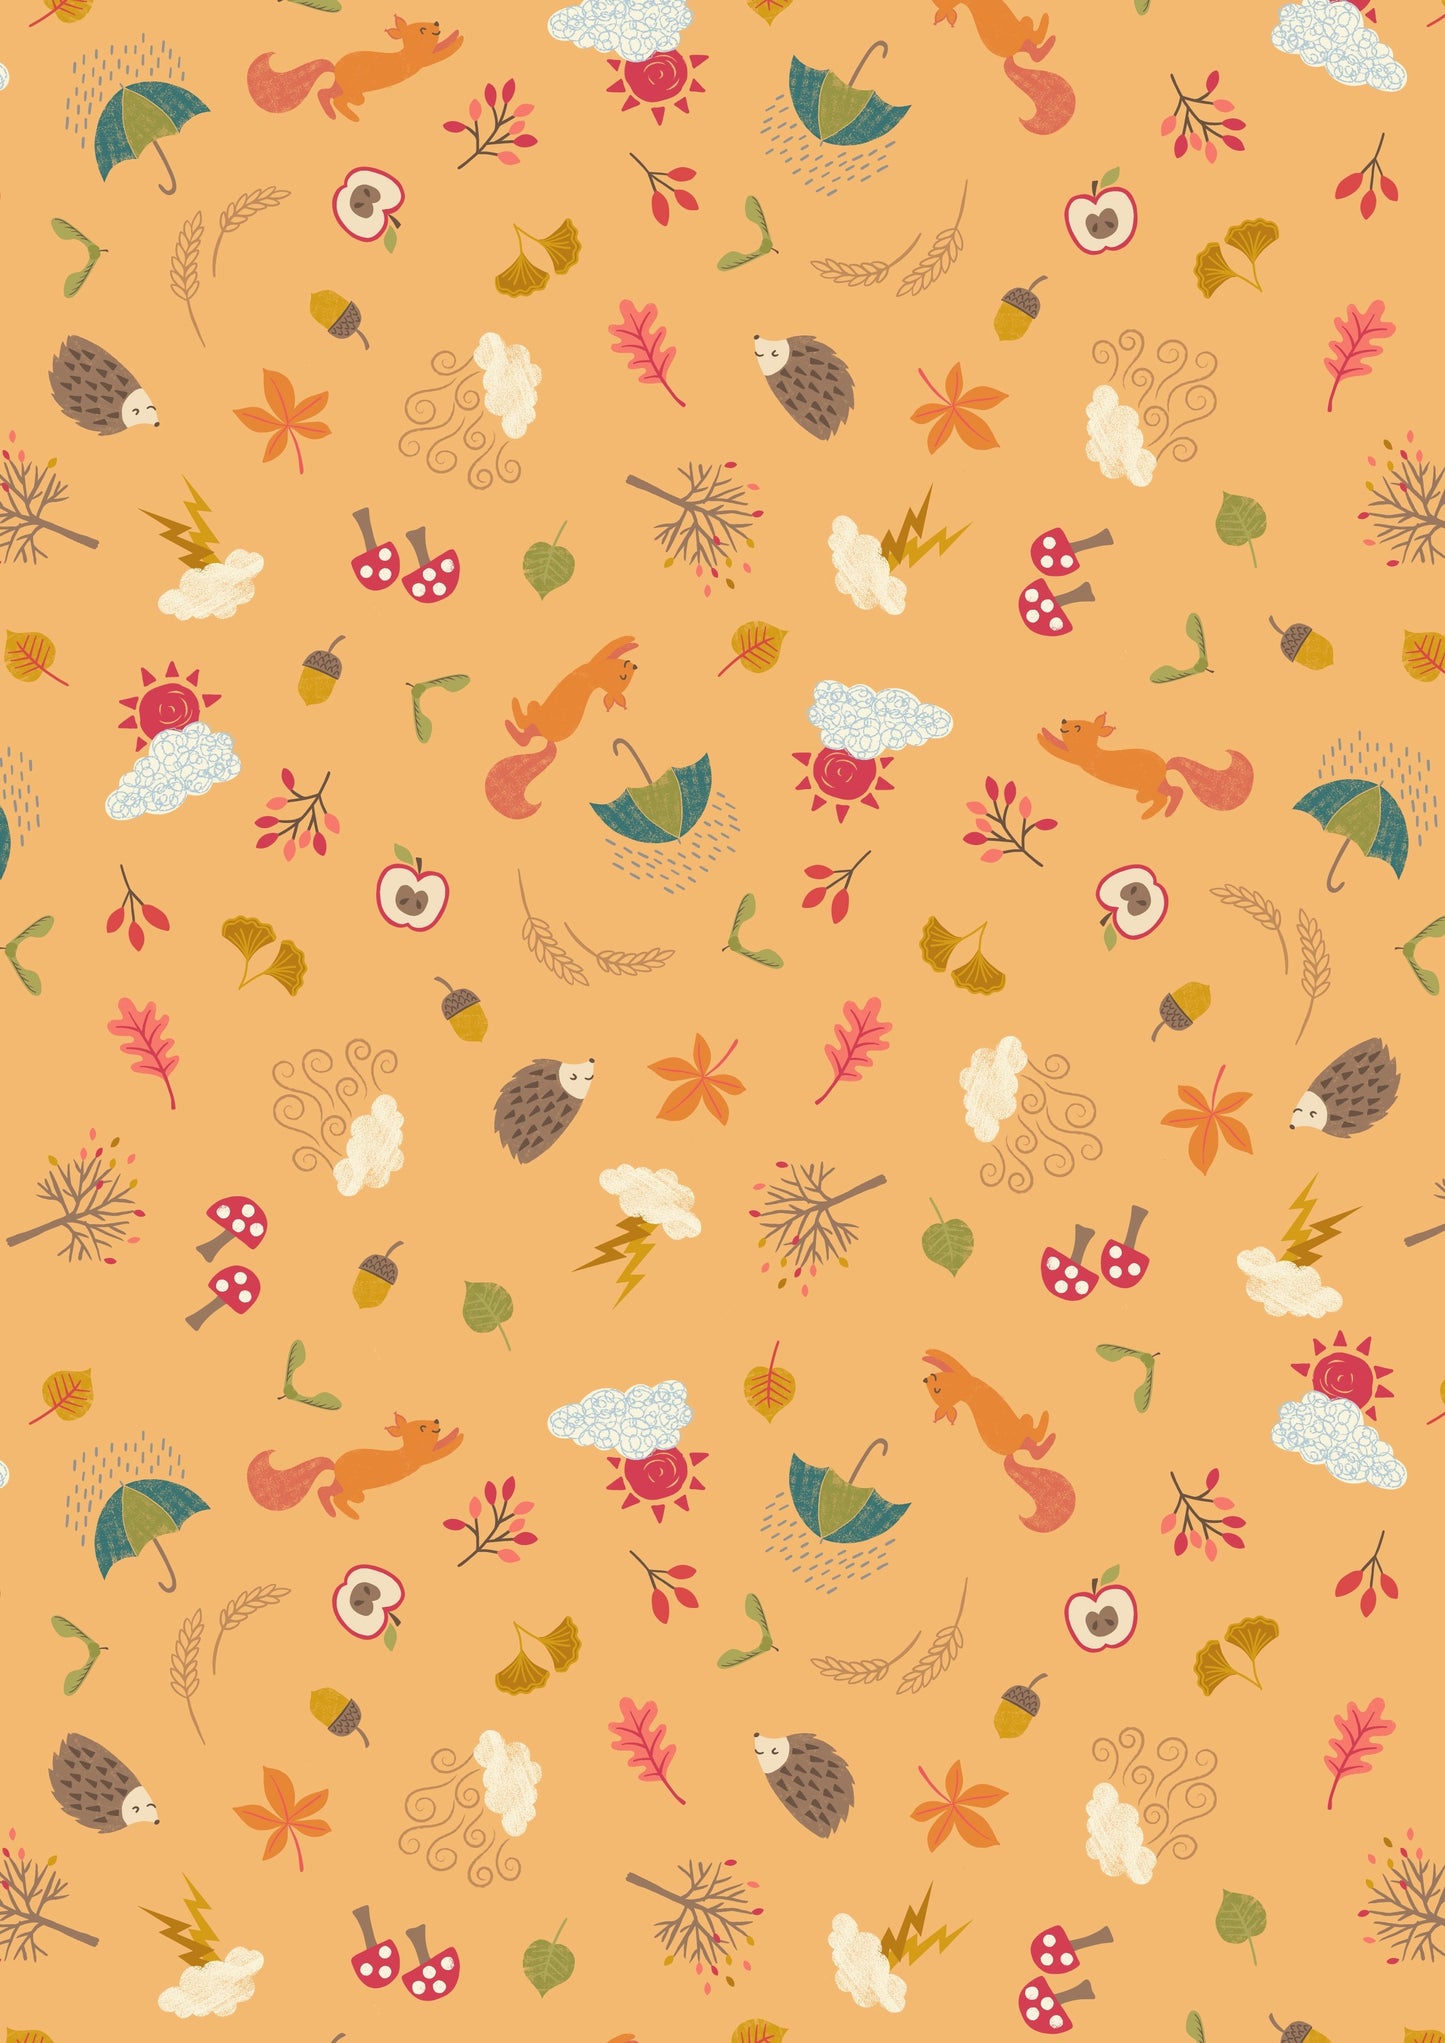 Whatever the Weather - Autumn POS Fabric - Trapunto